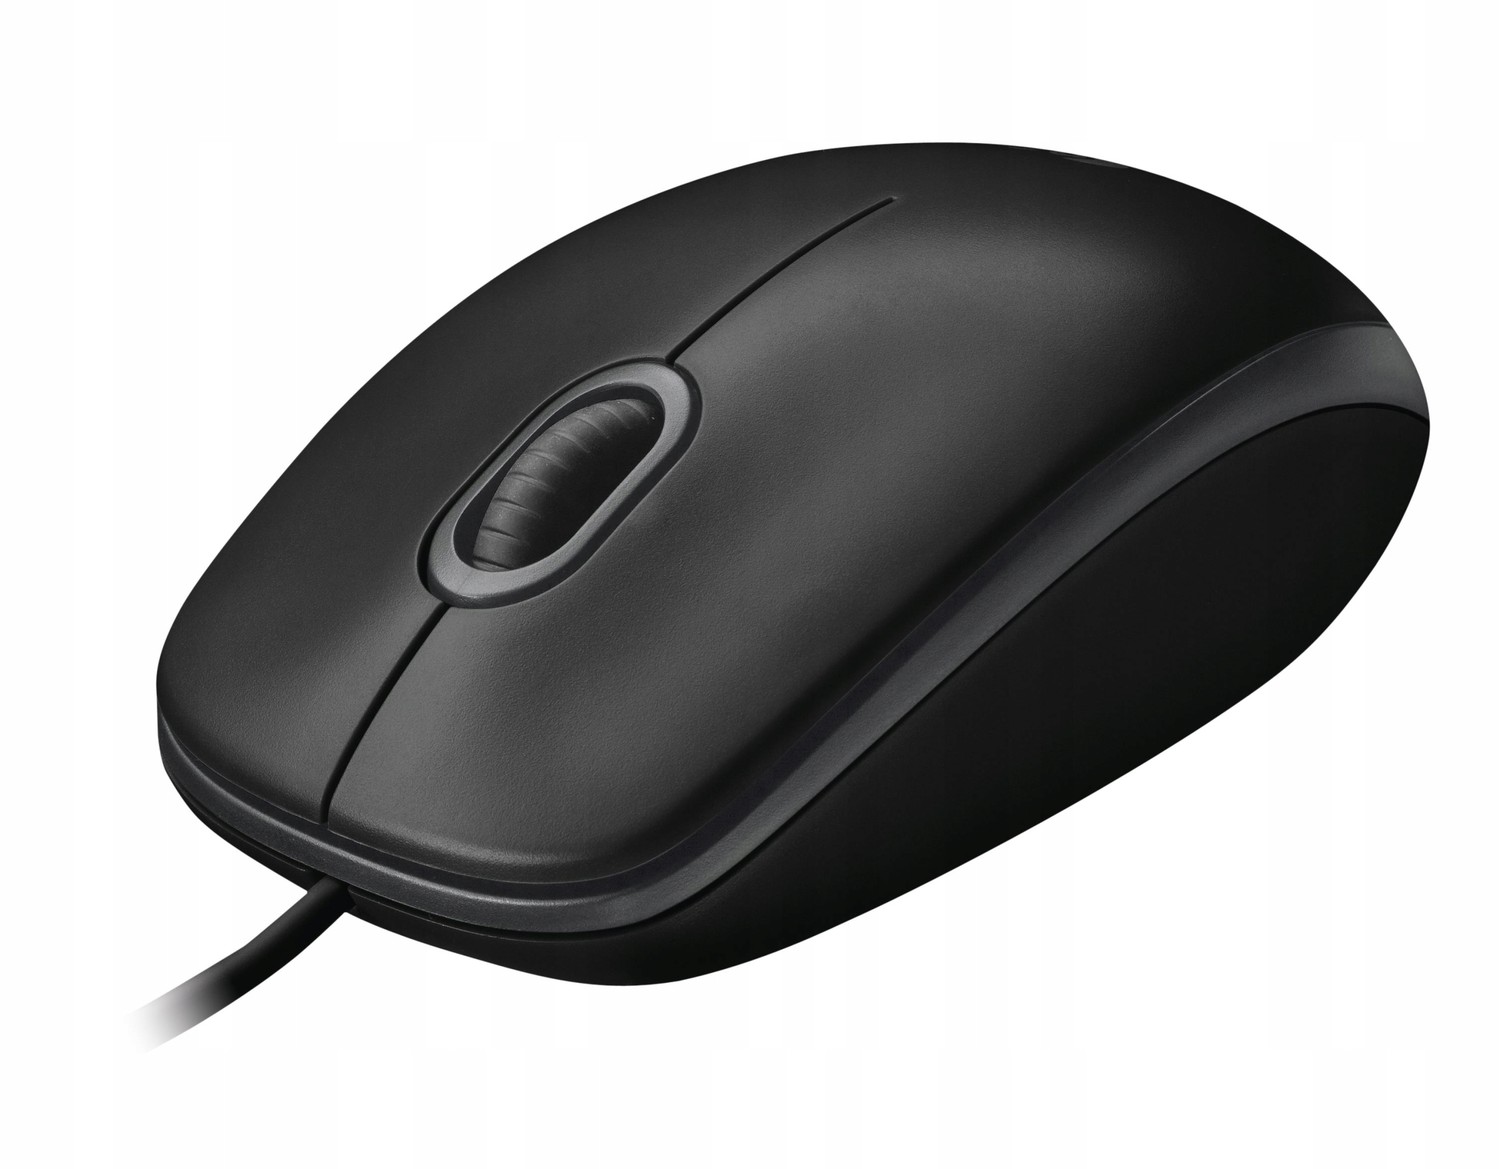 B100 Optical Usb Mouse, černá (910-003357)